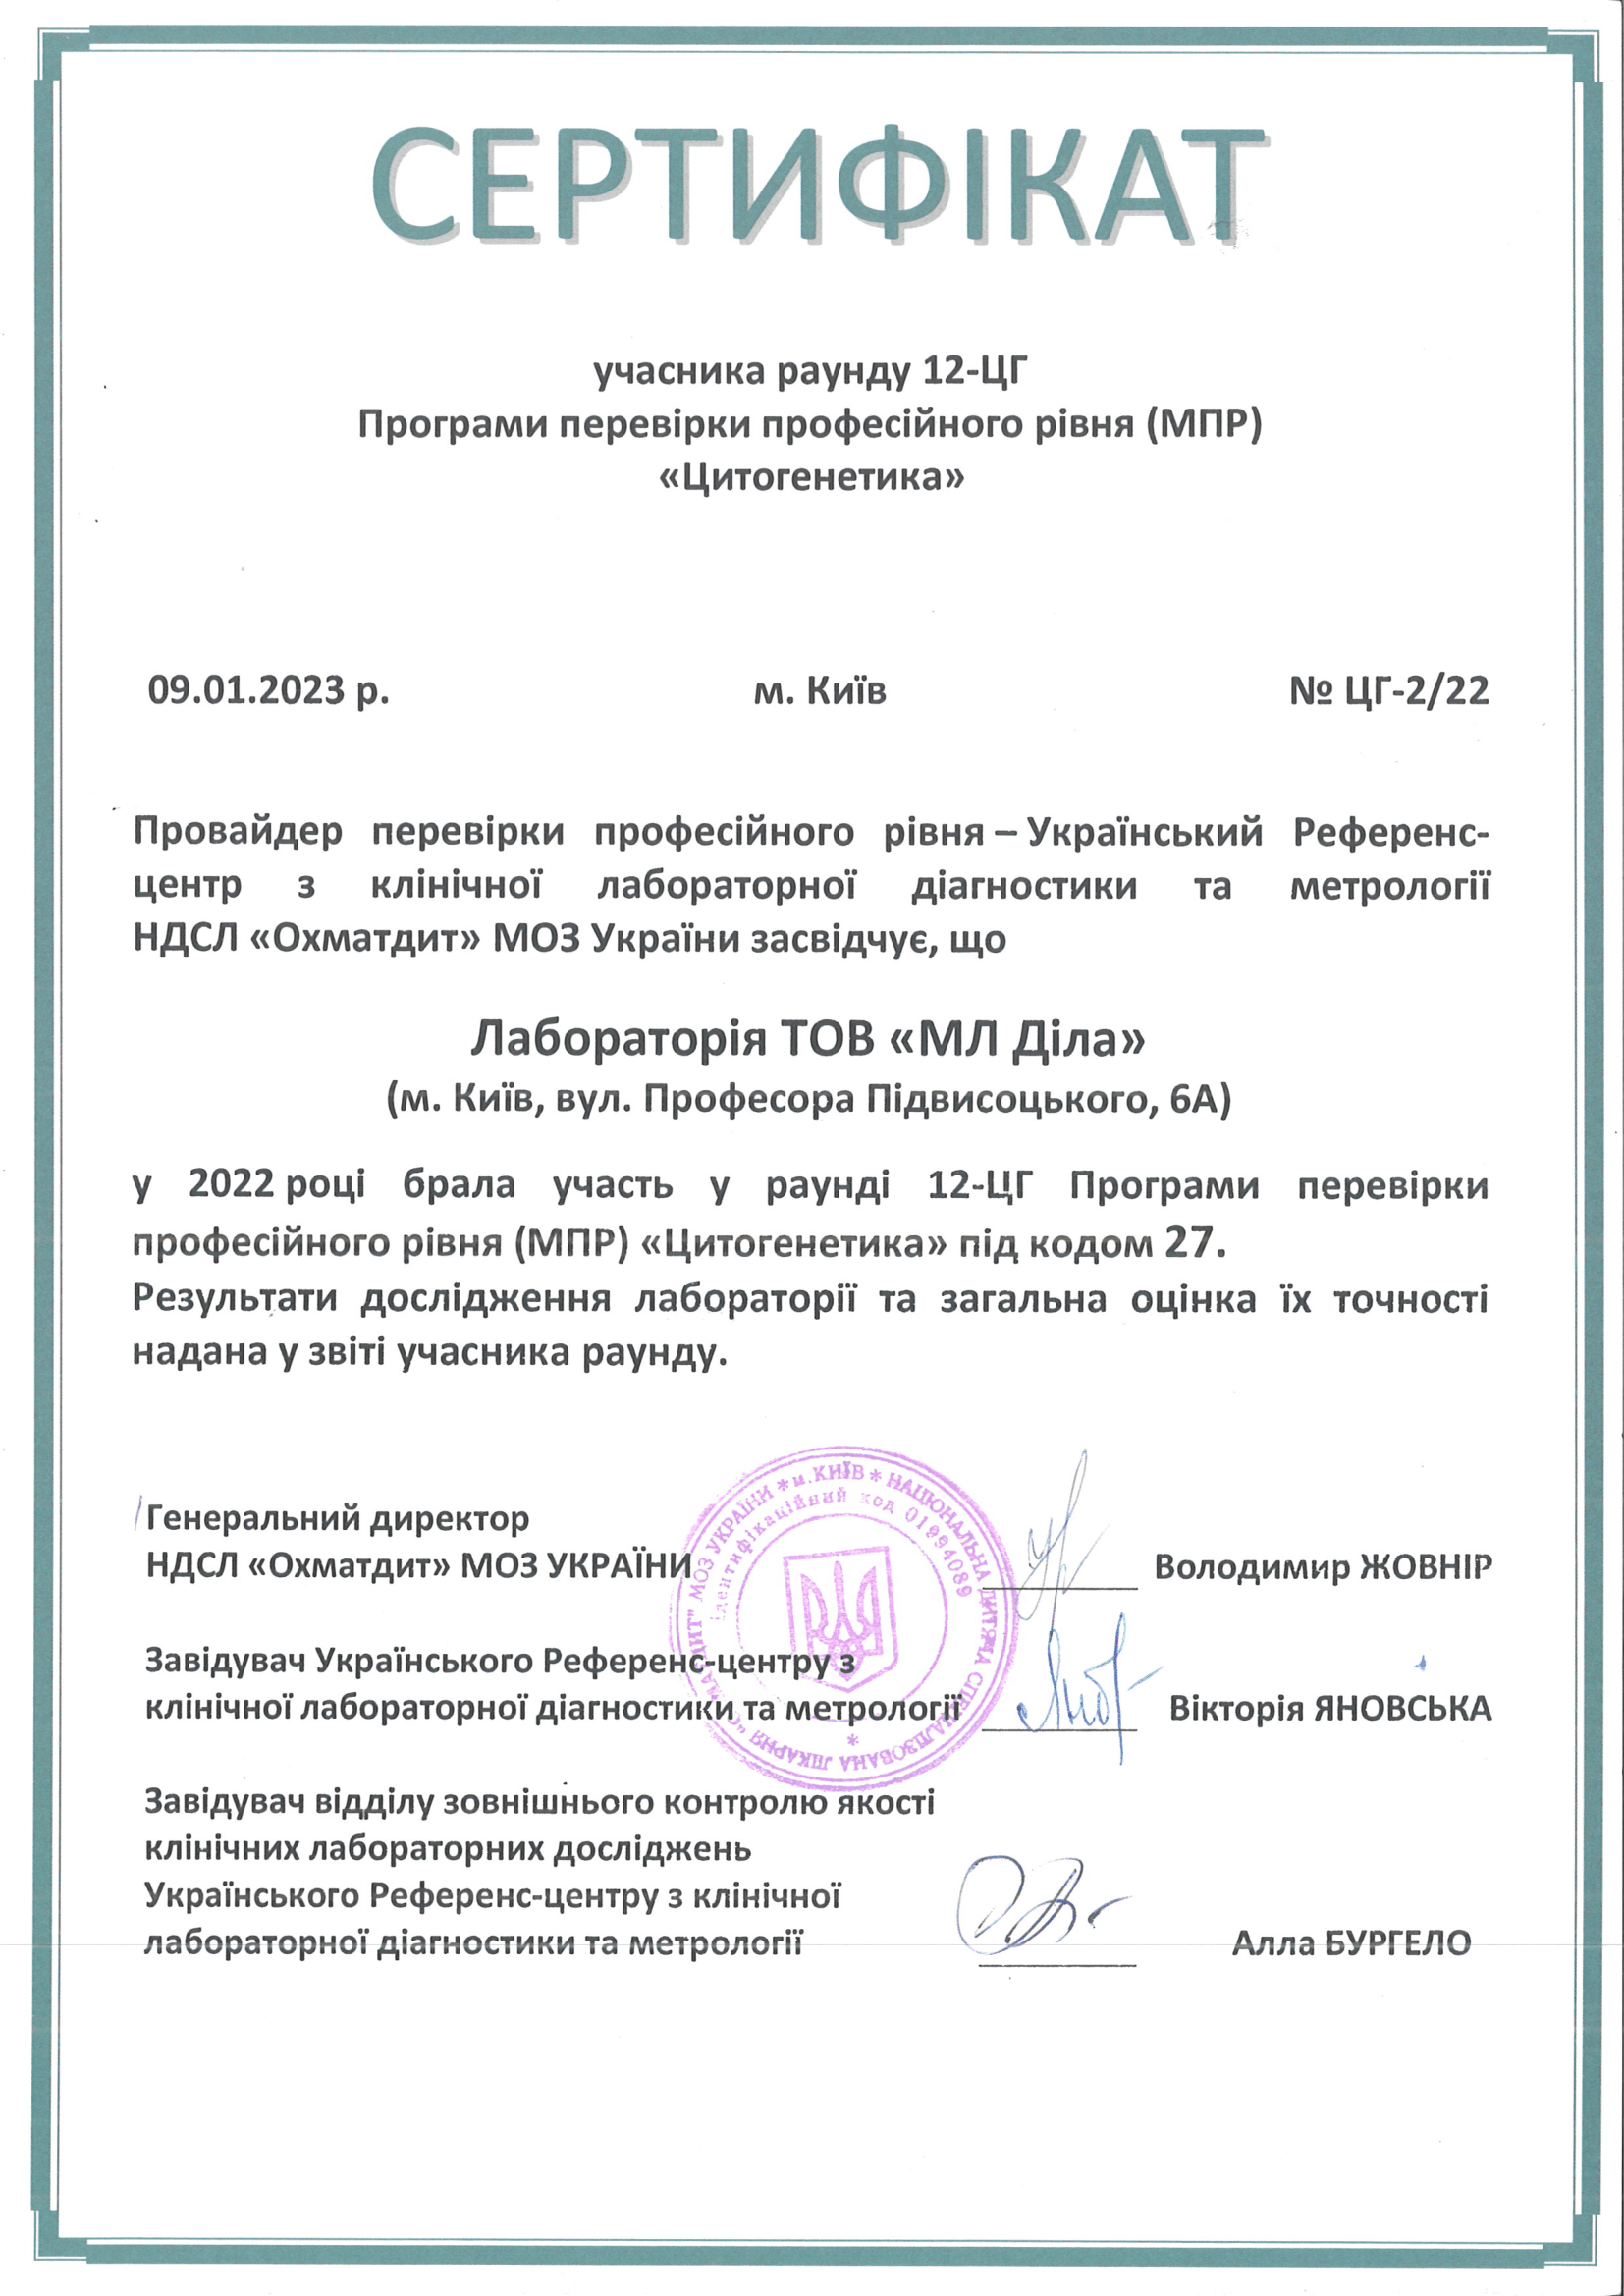 Фото - Сертификат участника раунда 12-ЦГ МРП "Цитогенетика"